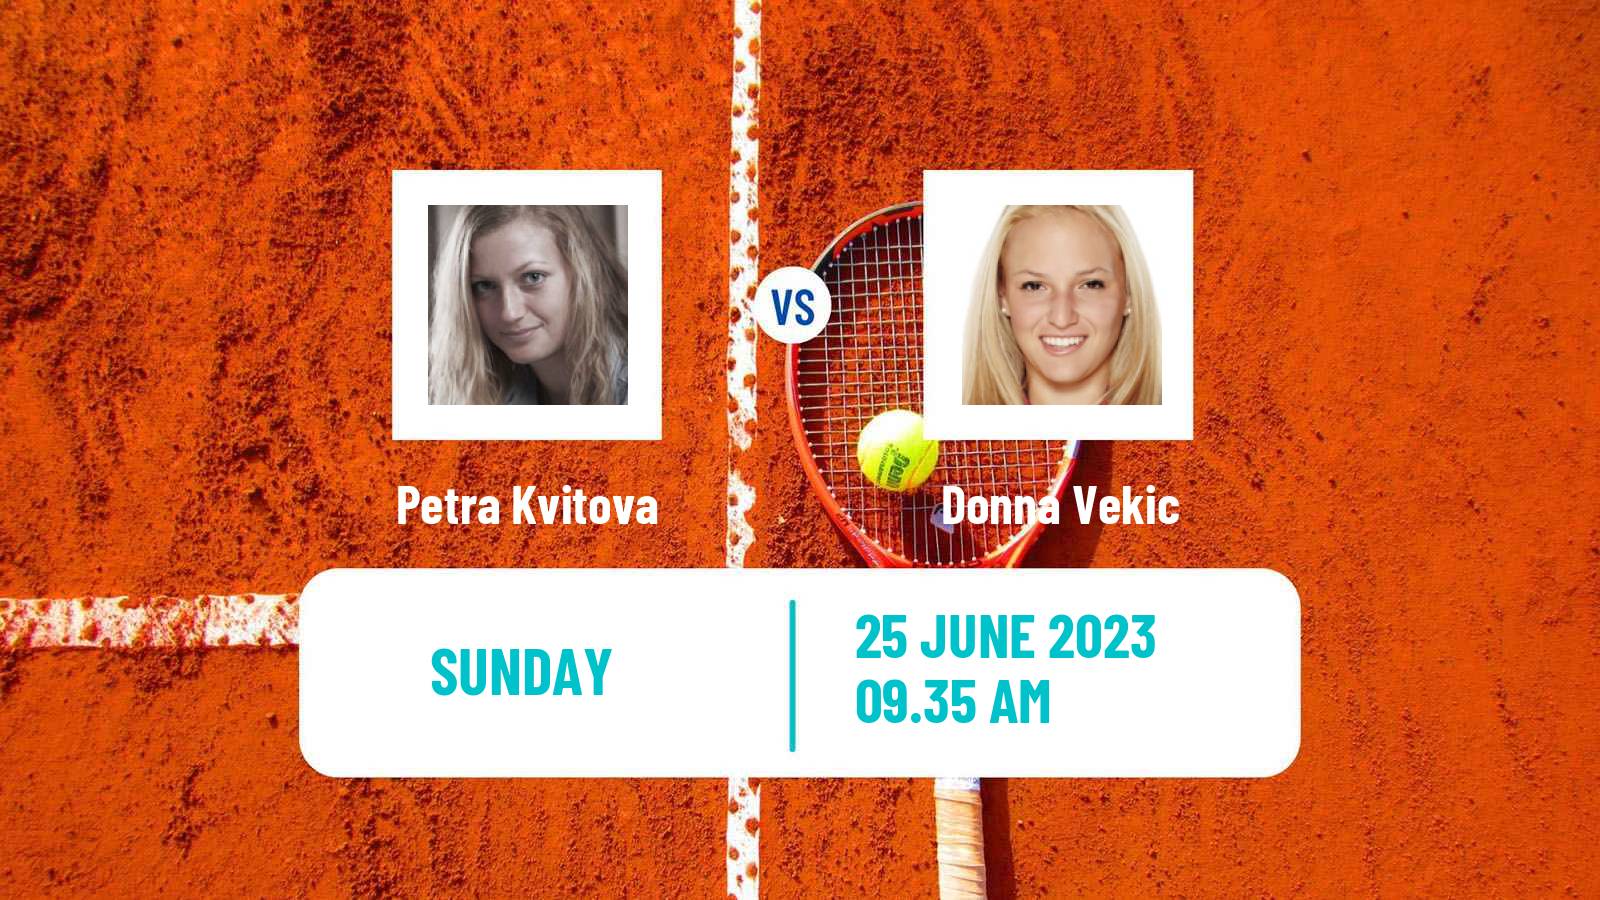 Tennis WTA Berlin Petra Kvitova - Donna Vekic